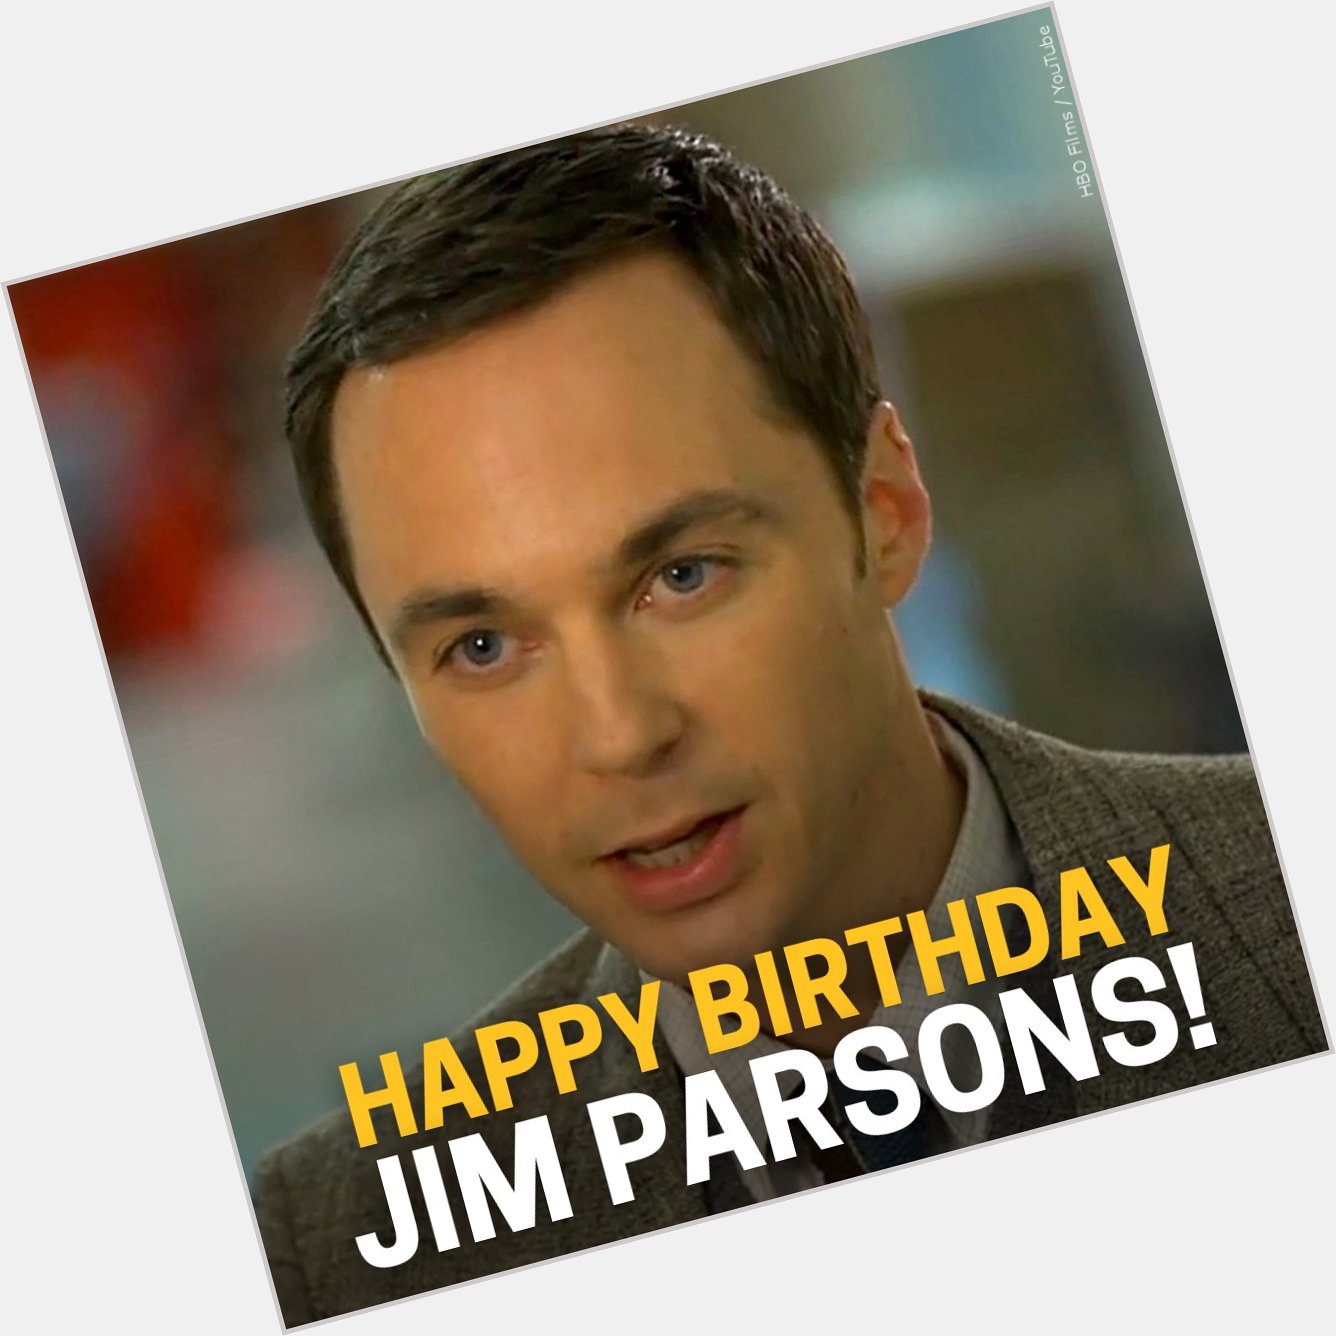 Happy birthday Jim Parsons! 